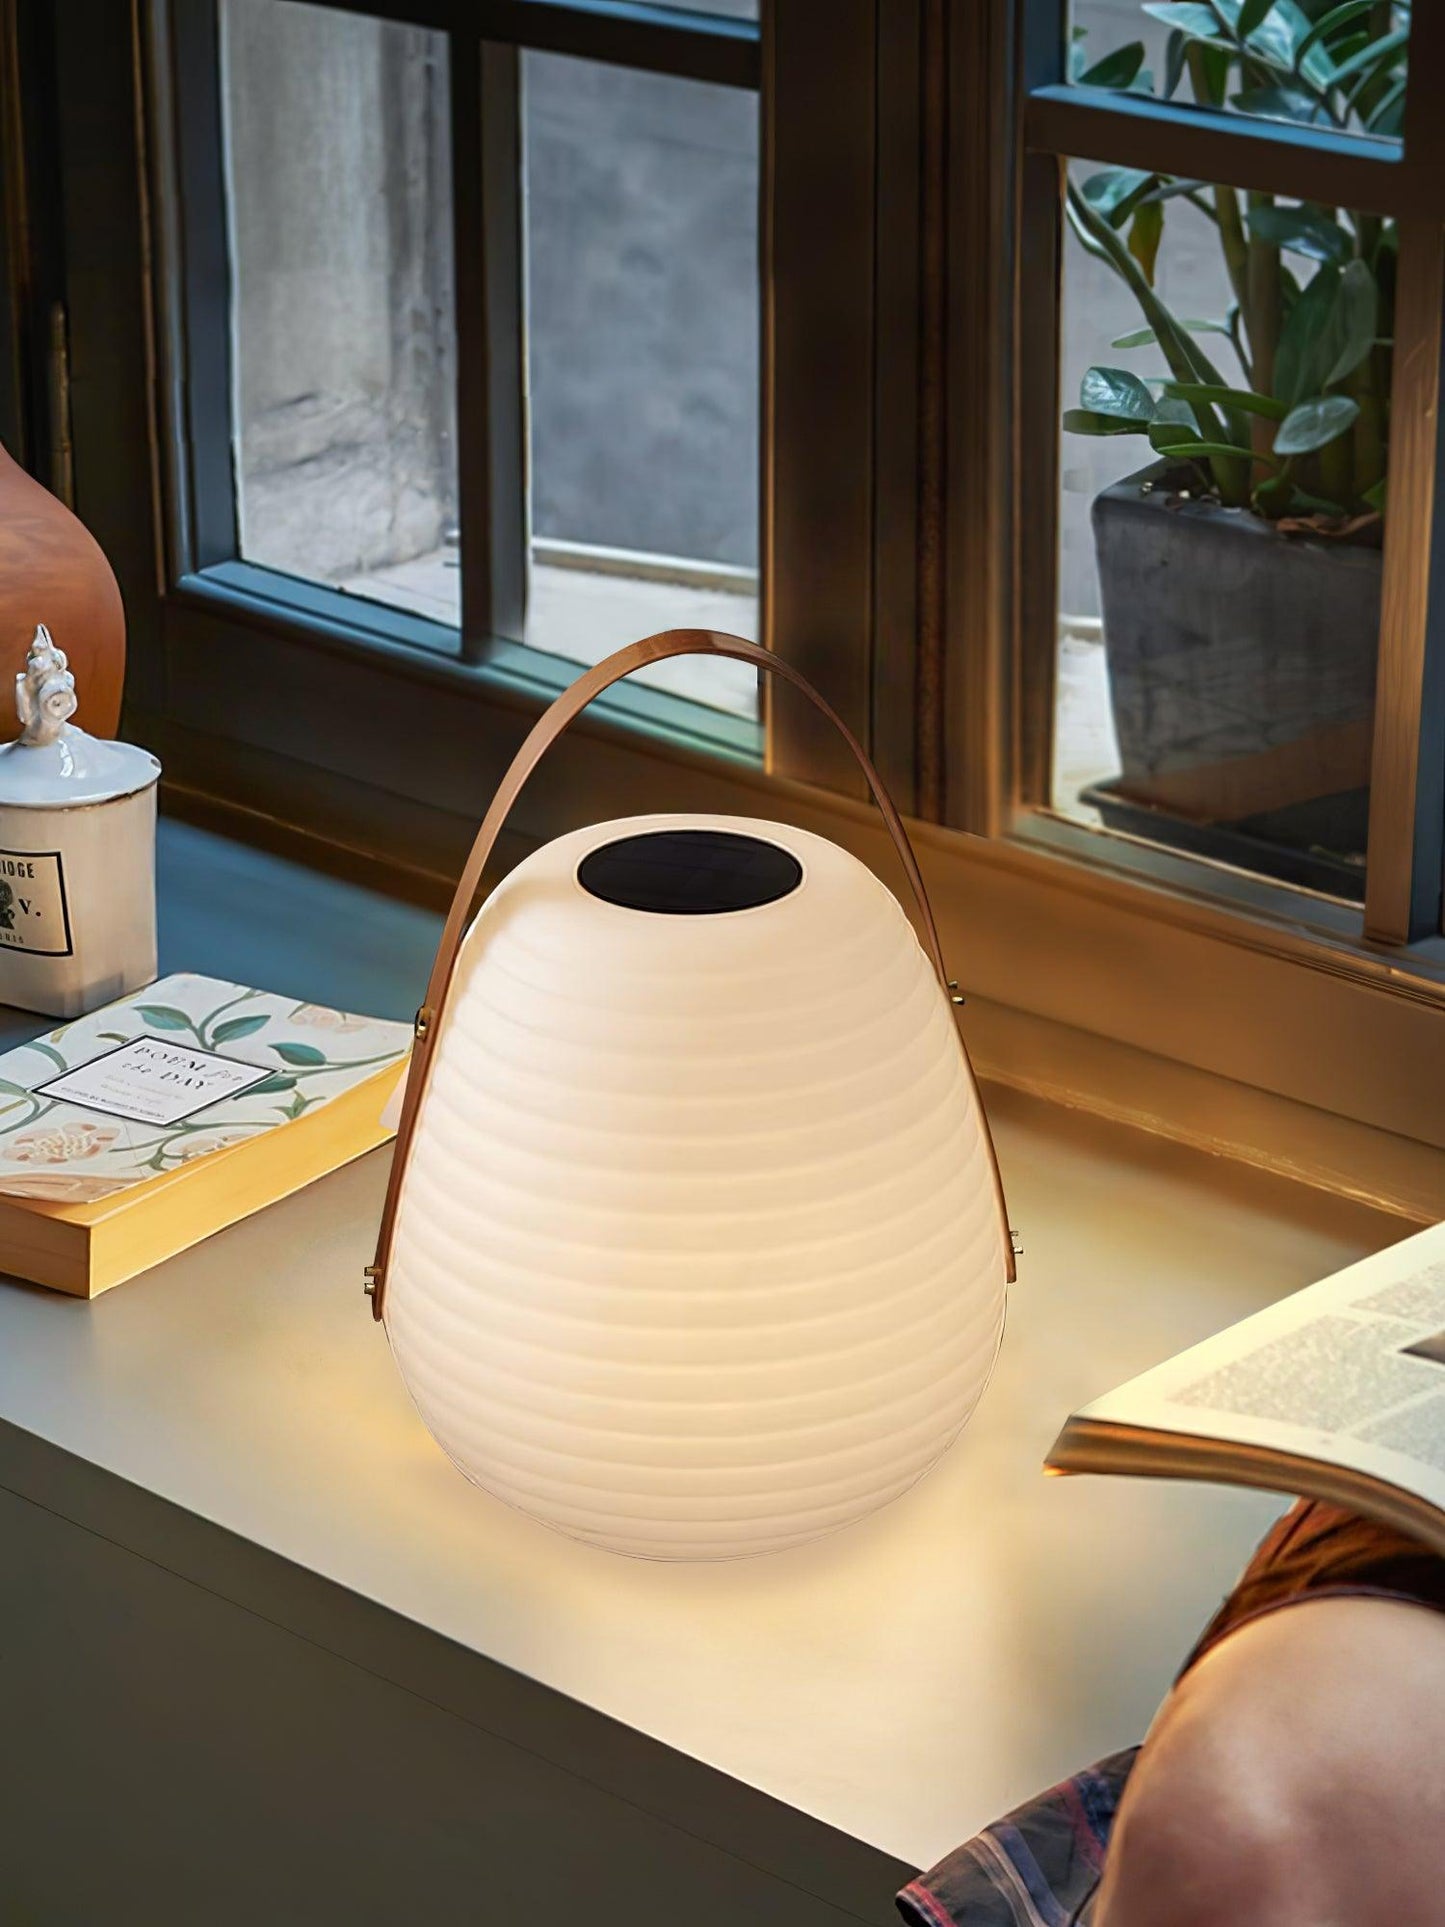 Beehive Lantern Outdoor Lamp